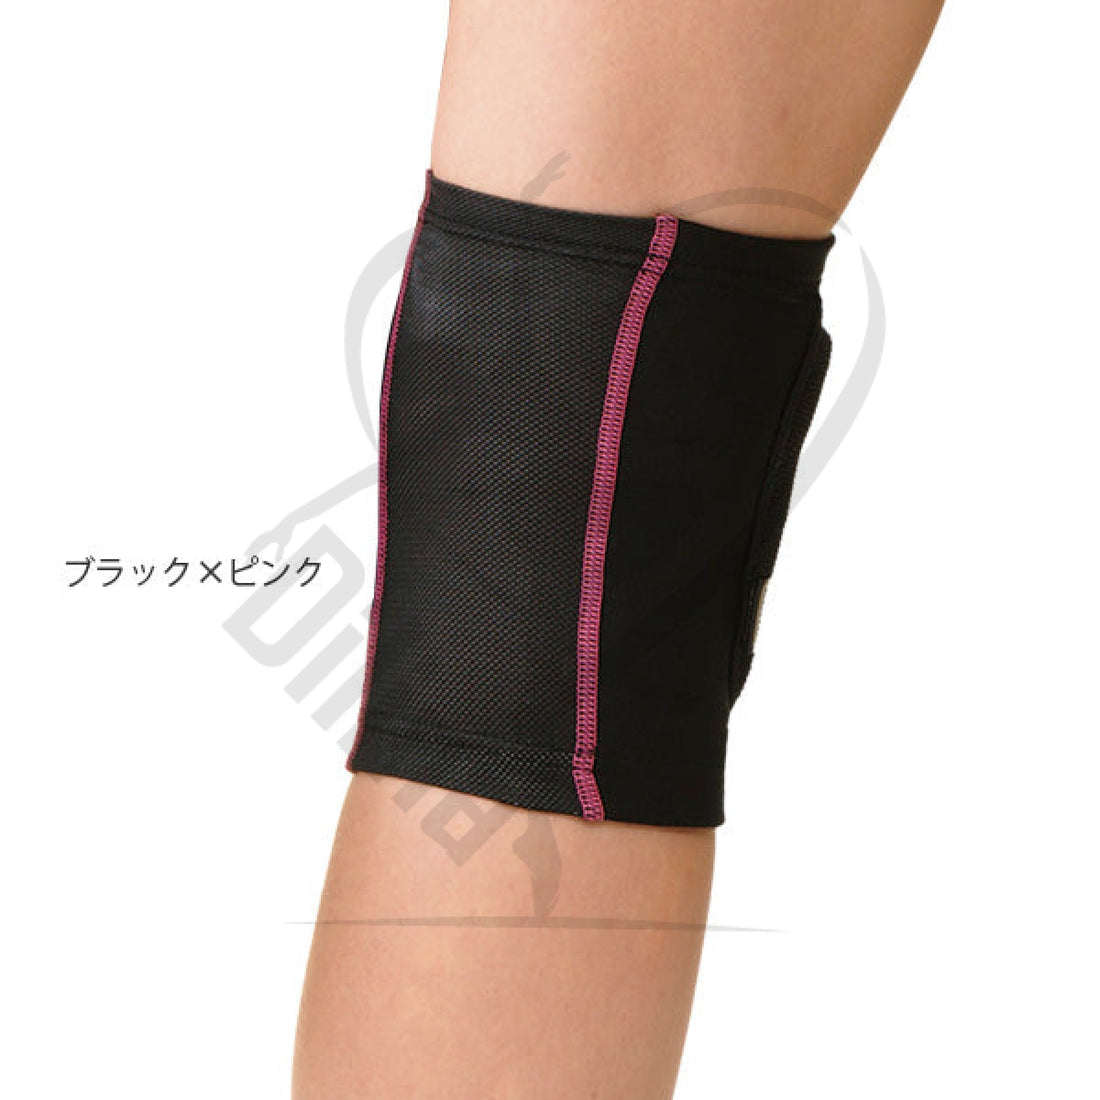 Sasaki Knee Support With High Resilience Sponge Leg Warmers